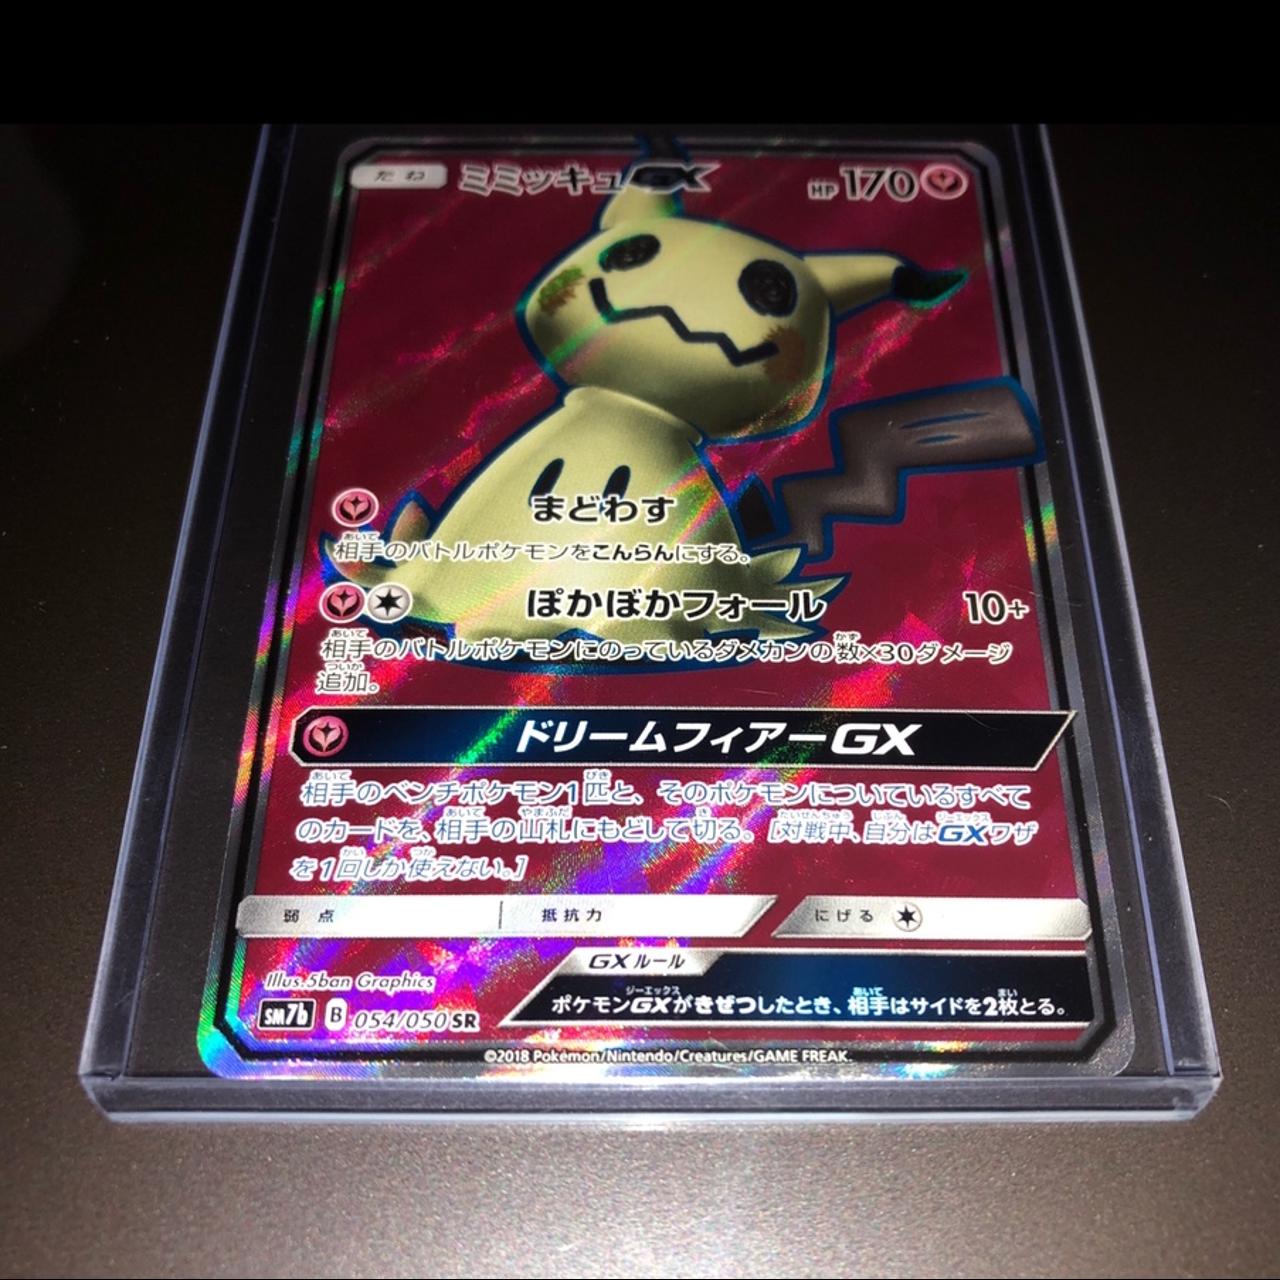 POKEMON CARDS, Rare - Pokemon Cards, full art - Rainbow Rare - Japanese